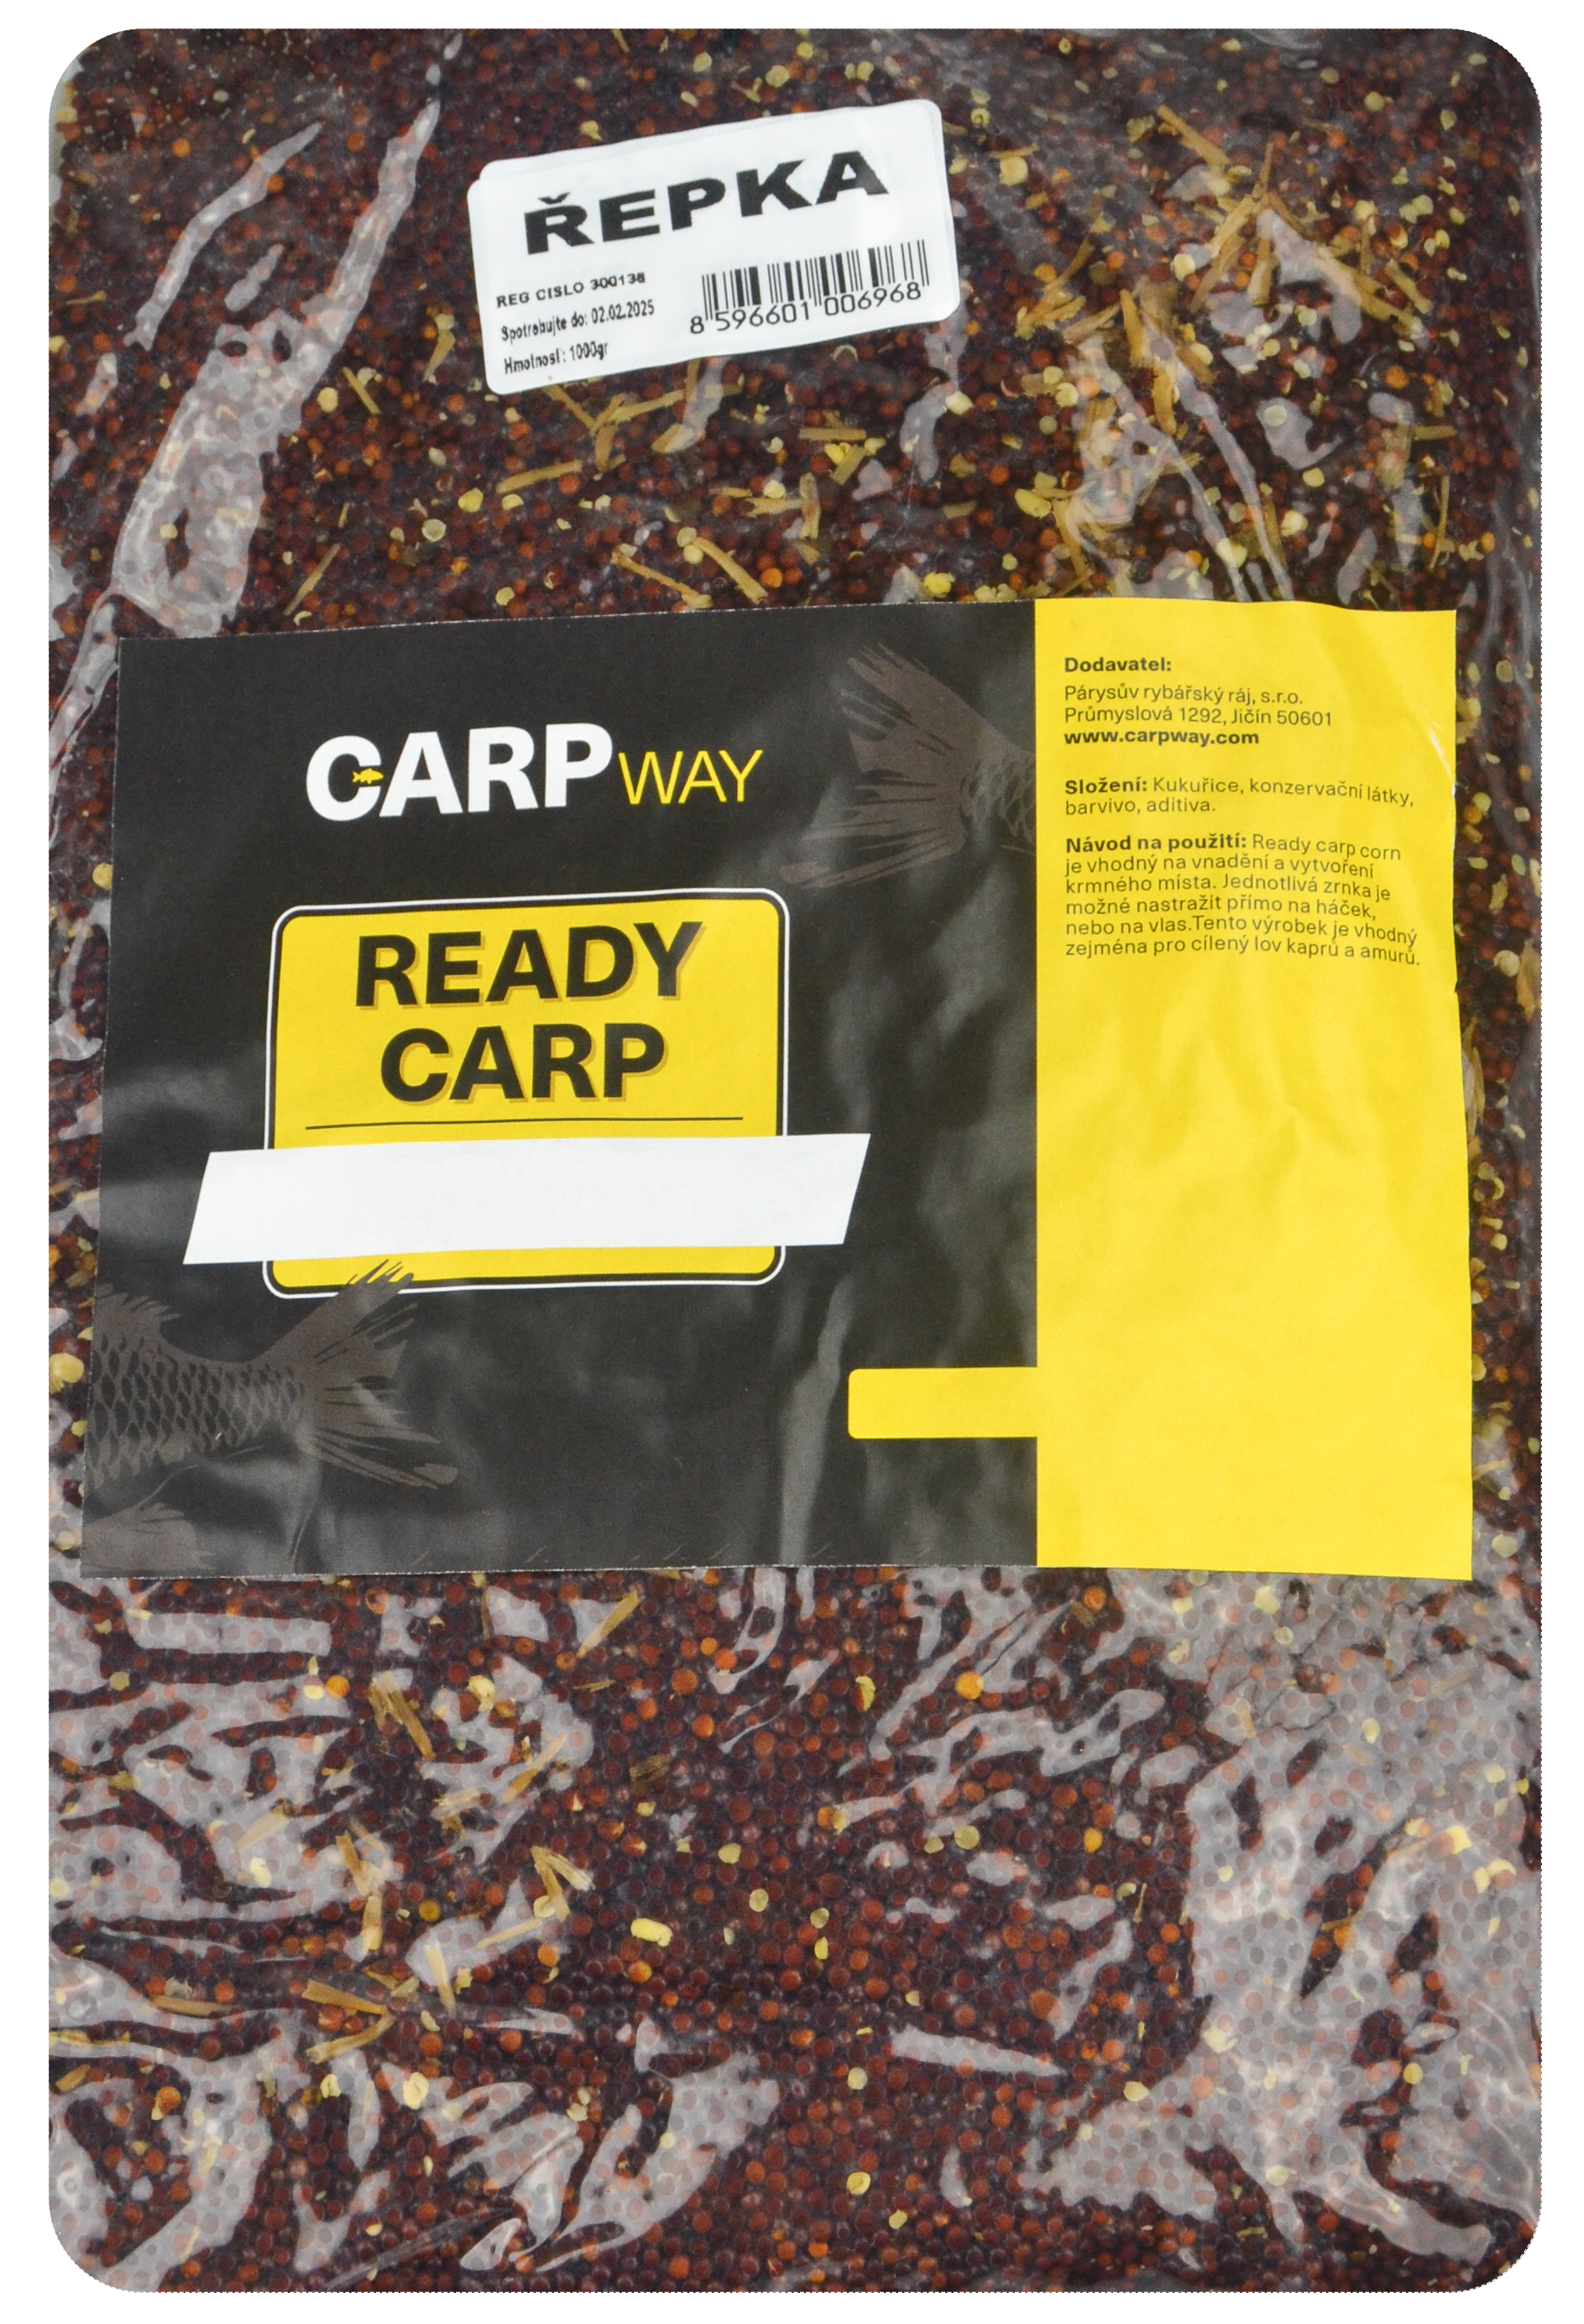 Carpway repka ready carp varená 1 kg